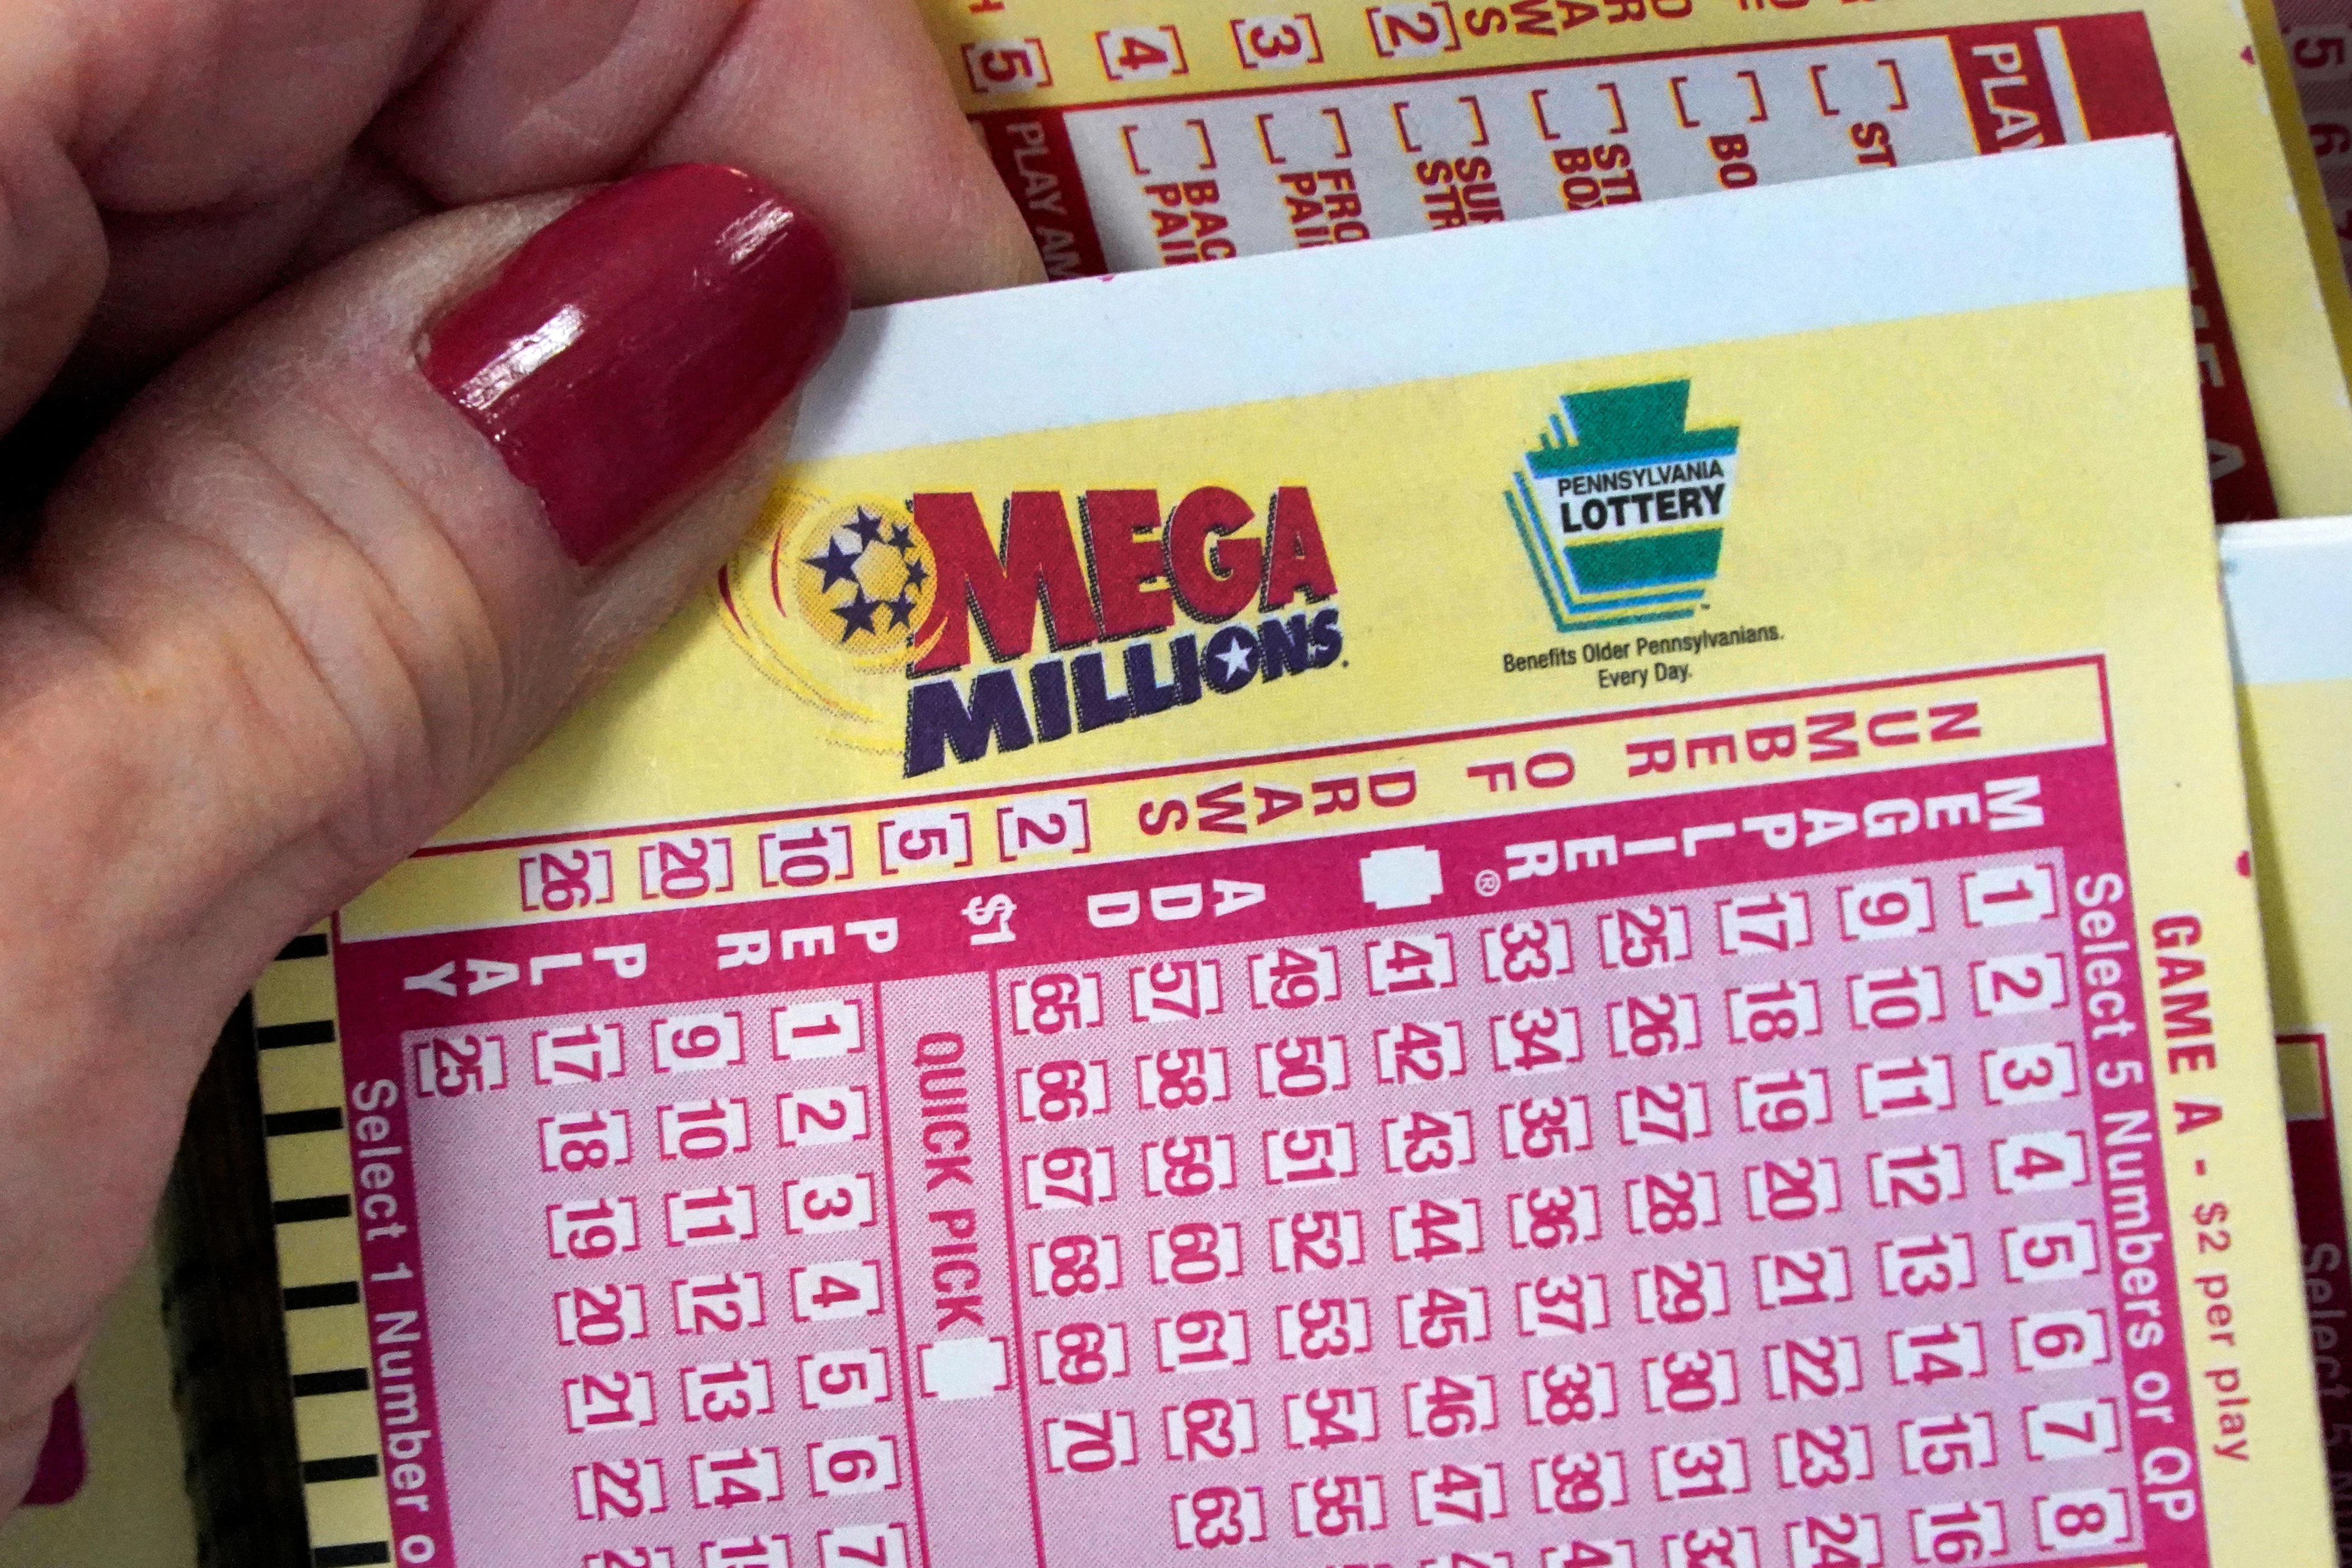 Michigan man says he'll live debtfree after winning 1 million Mega